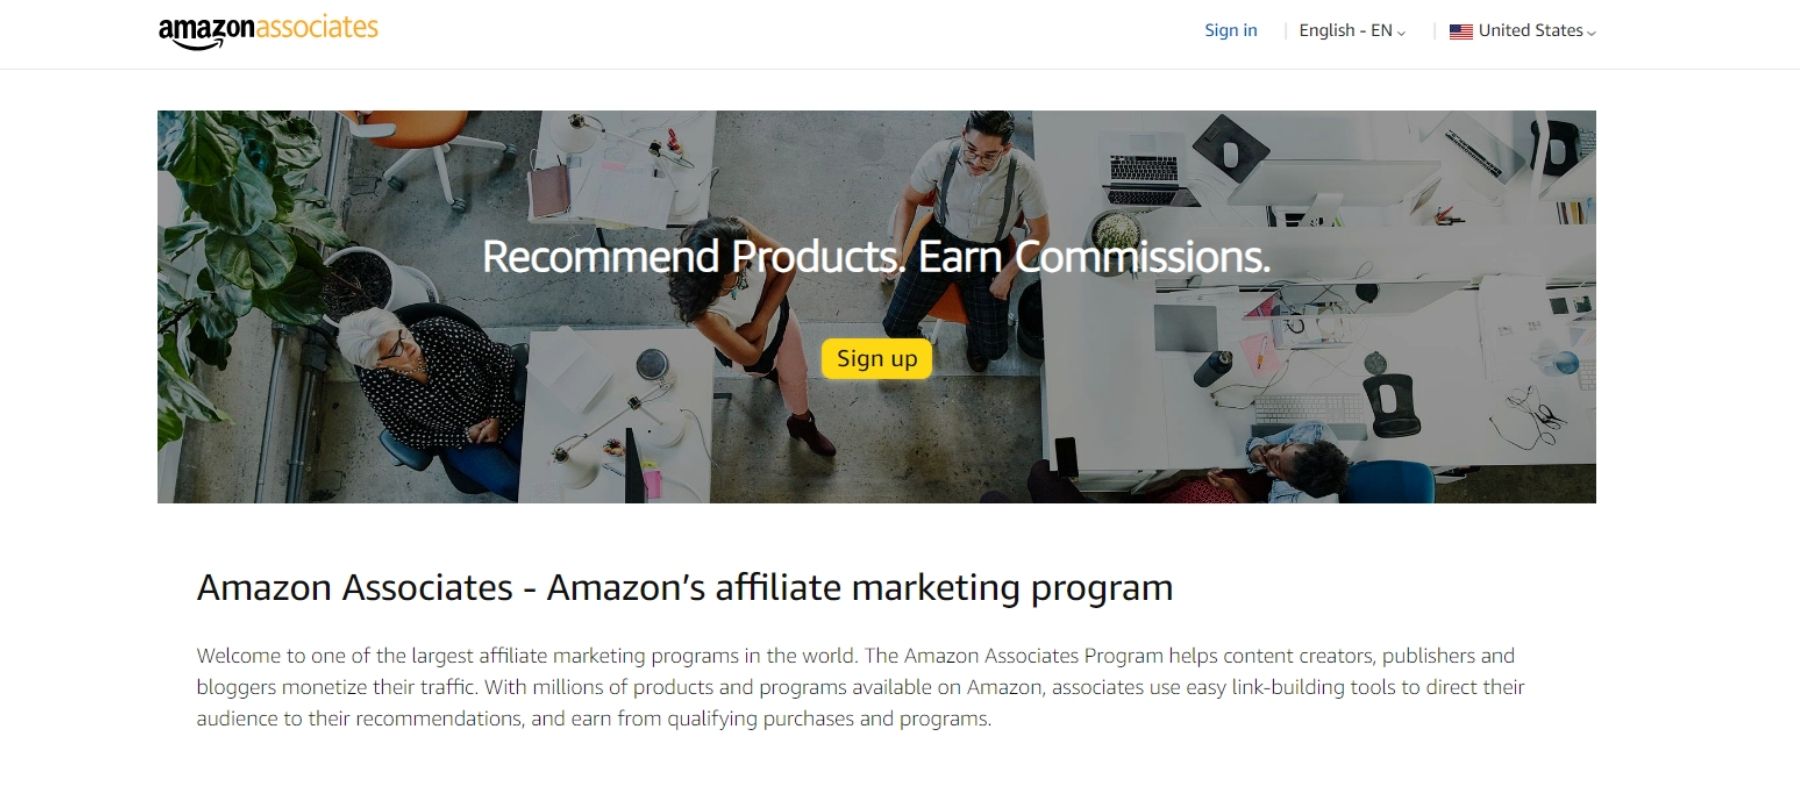 Amazon's Affiliate program